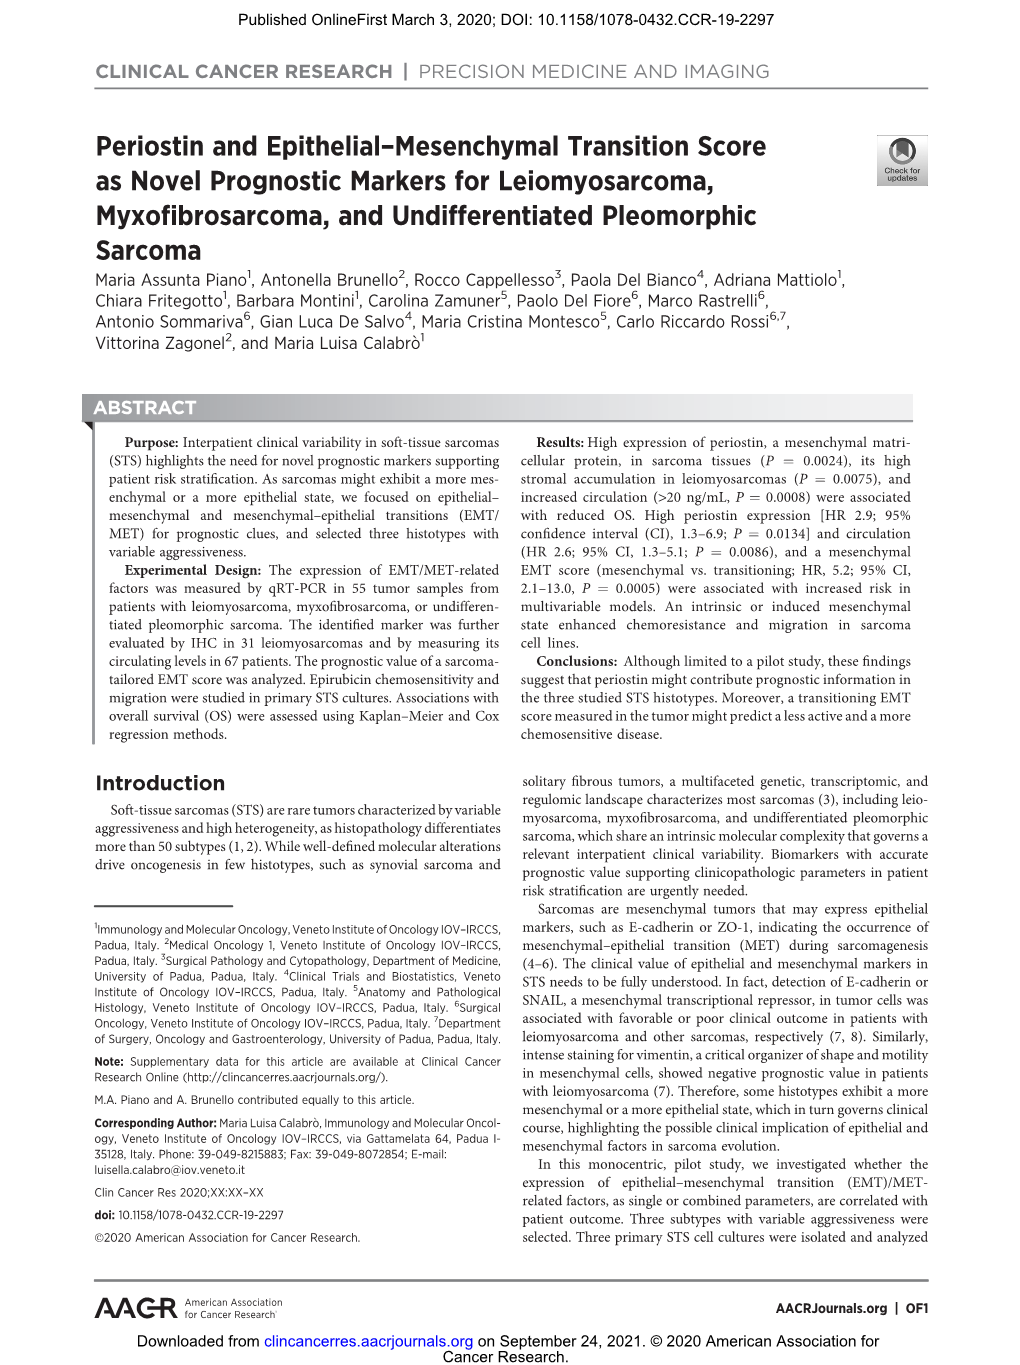 Periostin and Epithelial–Mesenchymal Transition Score As